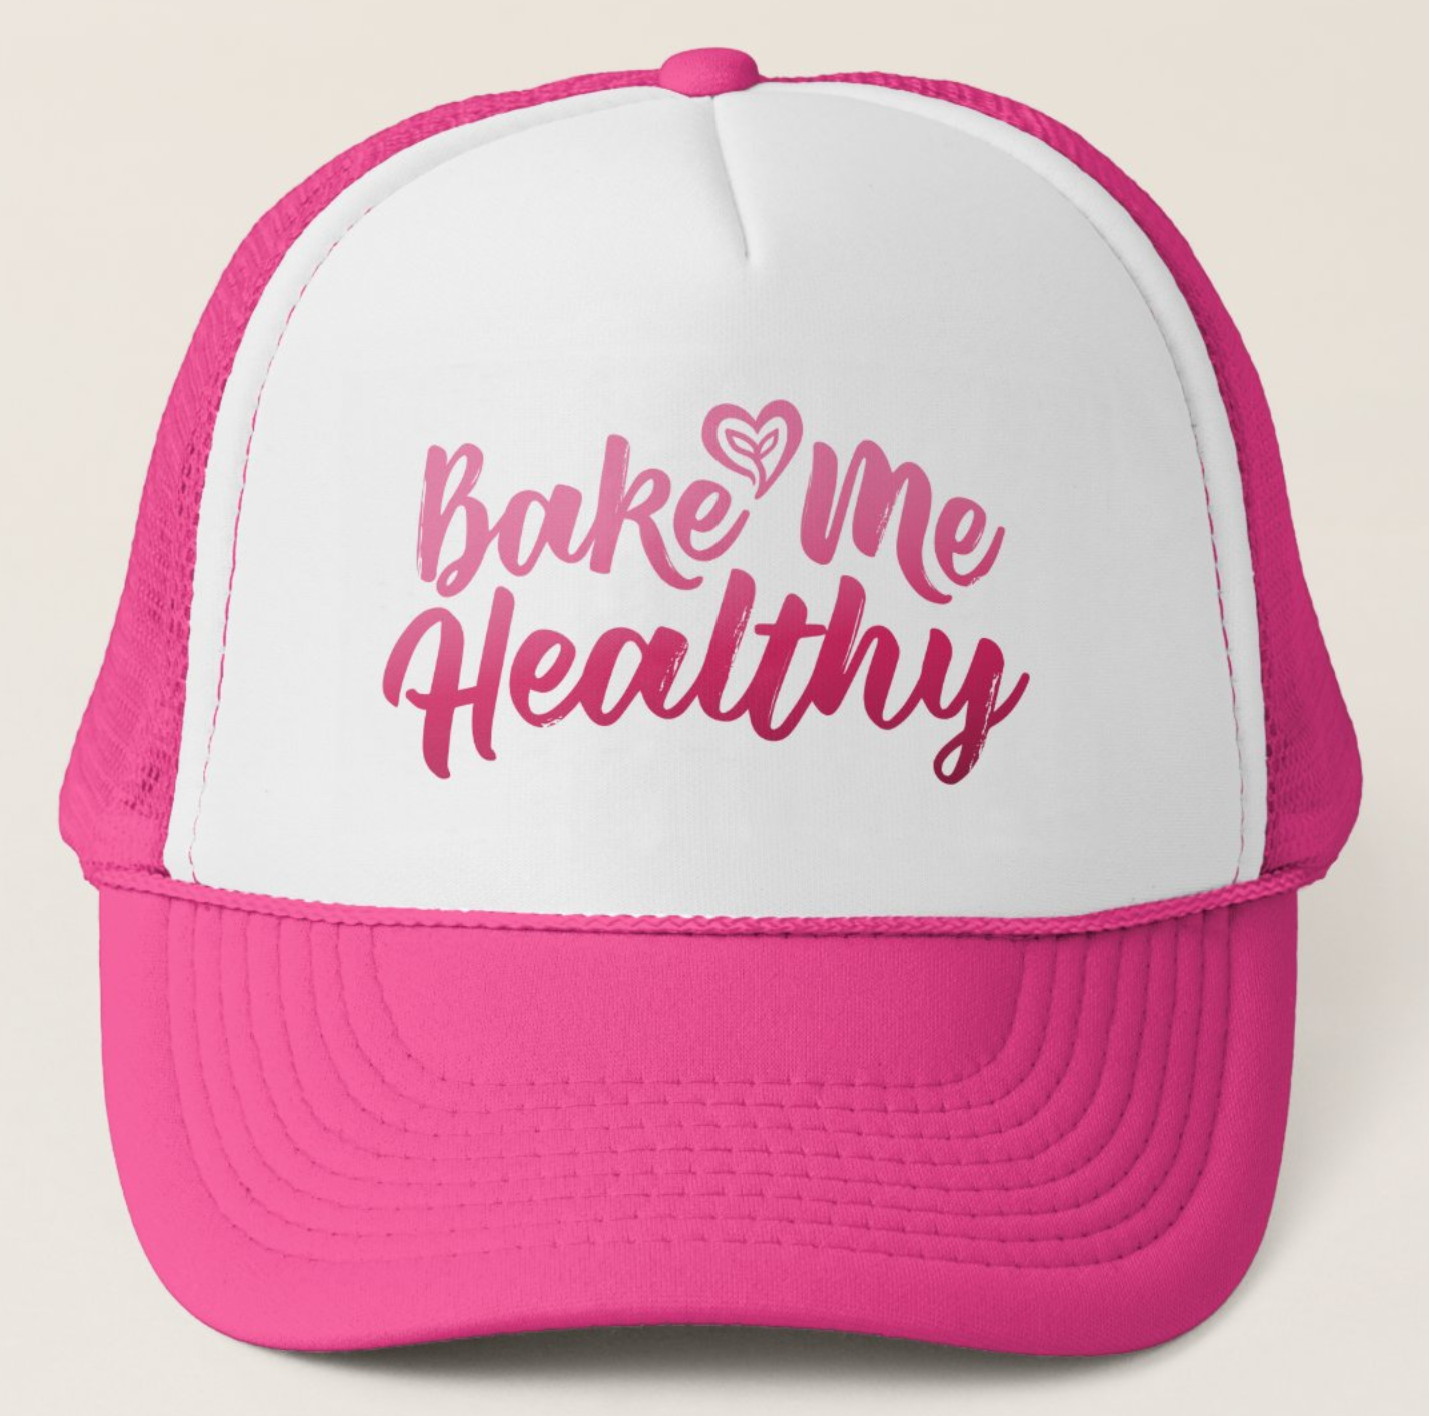 Bake Me Healthy Trucker Hat